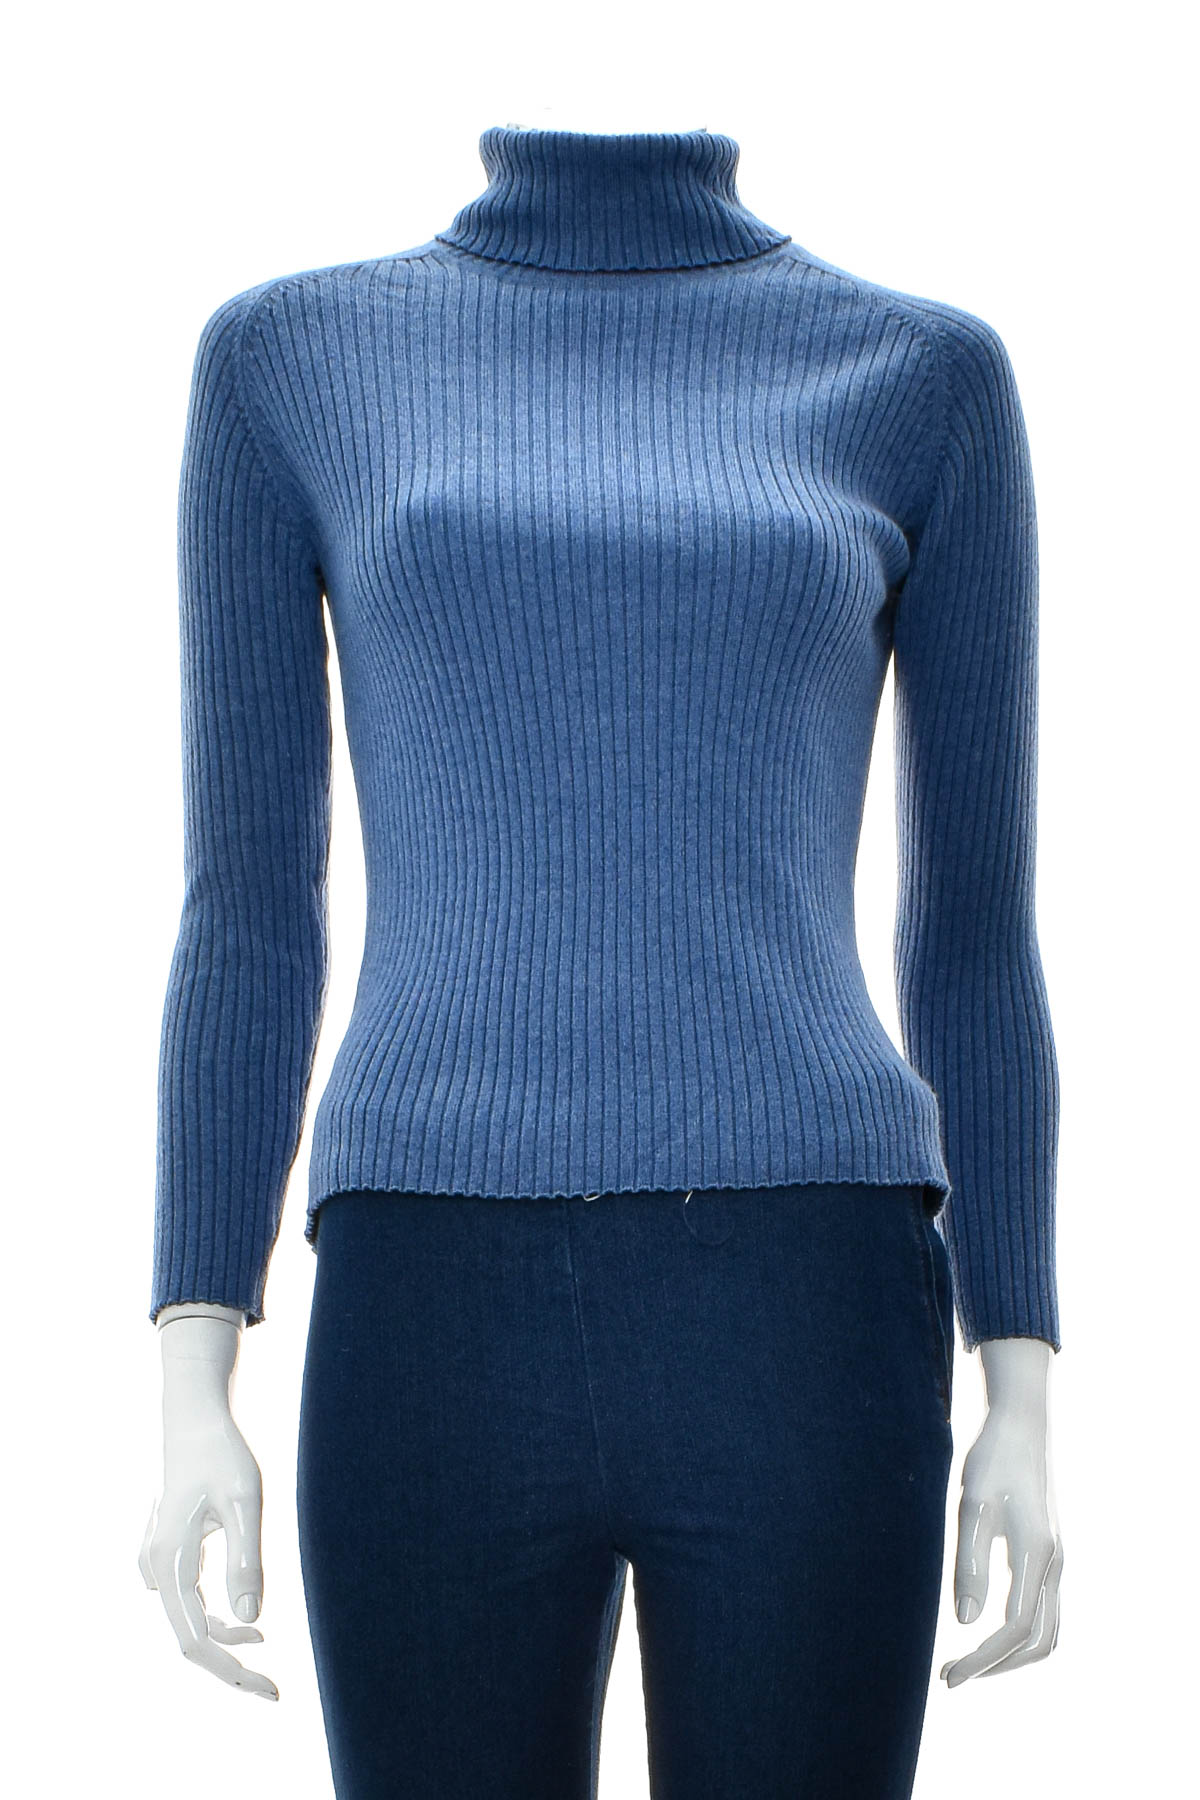 Women's sweater - Peter Hahn - 0